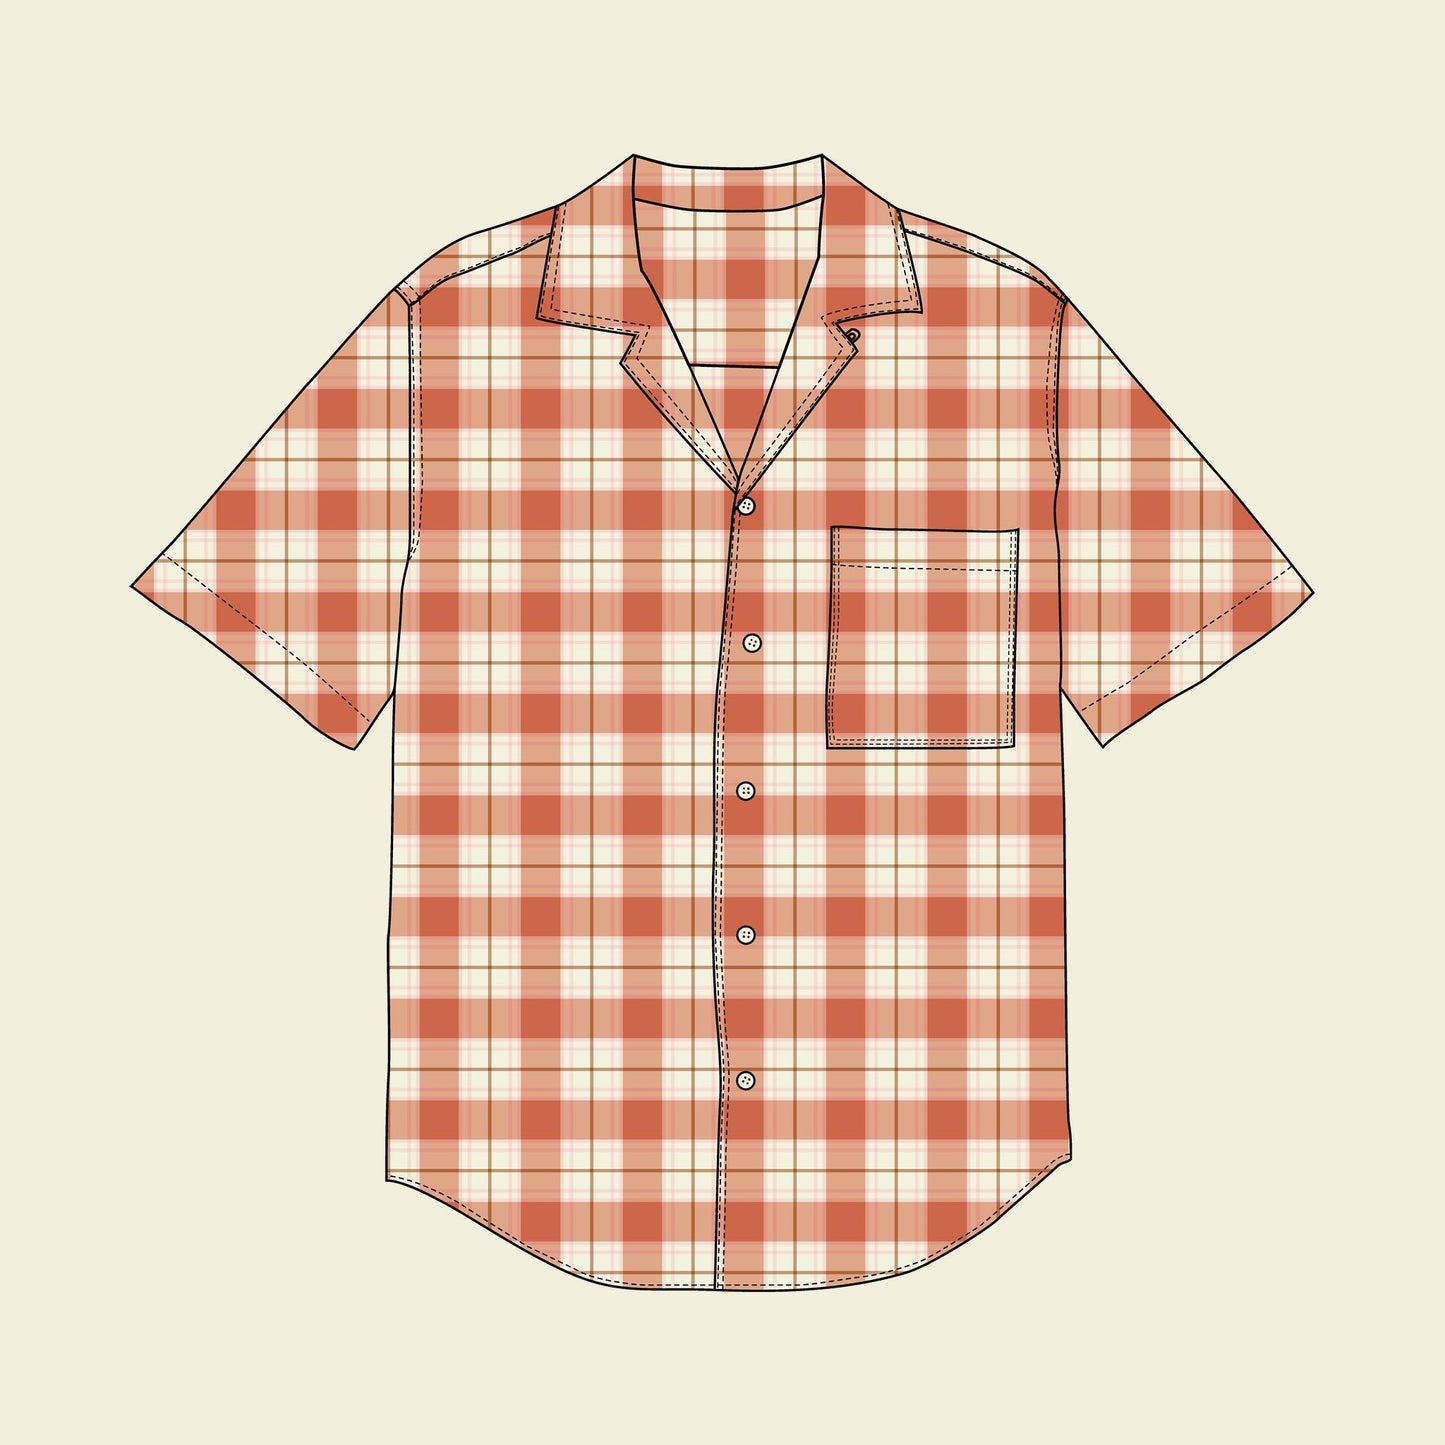 DIY Personalised Gift For Men: Camp Collar Shirt Kit made in Cotton Poplin Fabric in Plaid Orange Pink